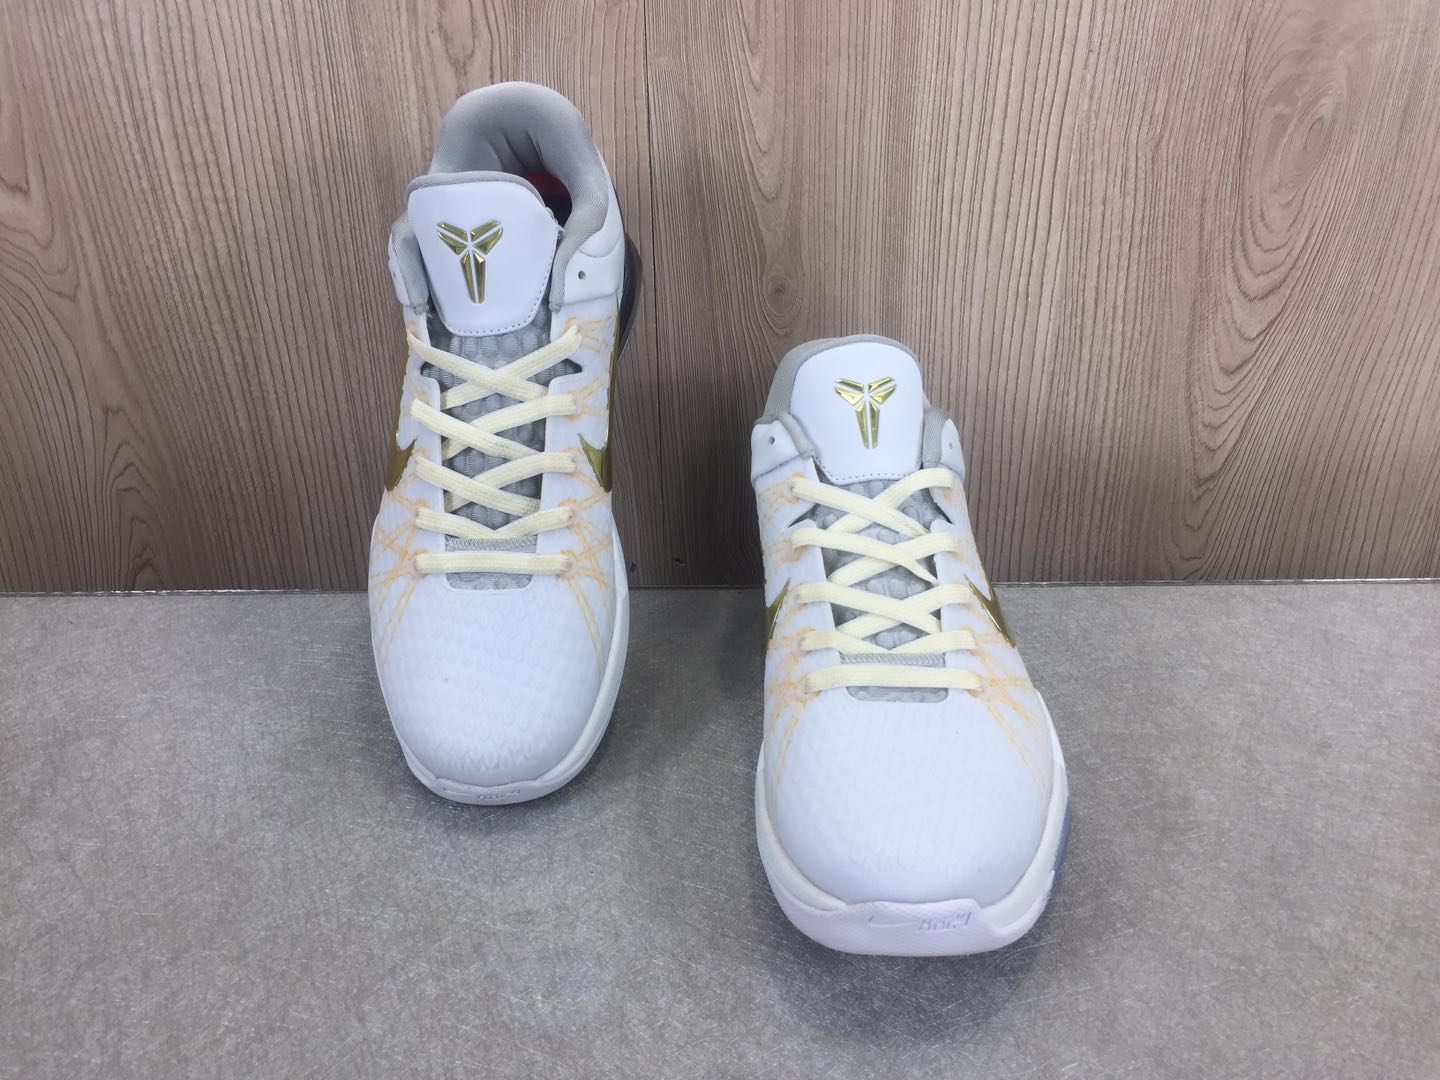 New Nike Kobe Bryant VII White Gold Black Shoes